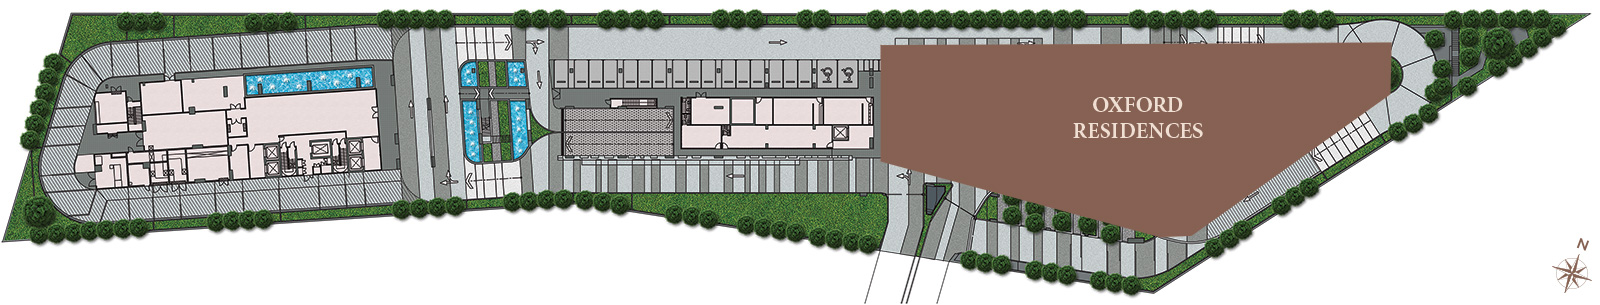 Facilities Plan: Ground Floor